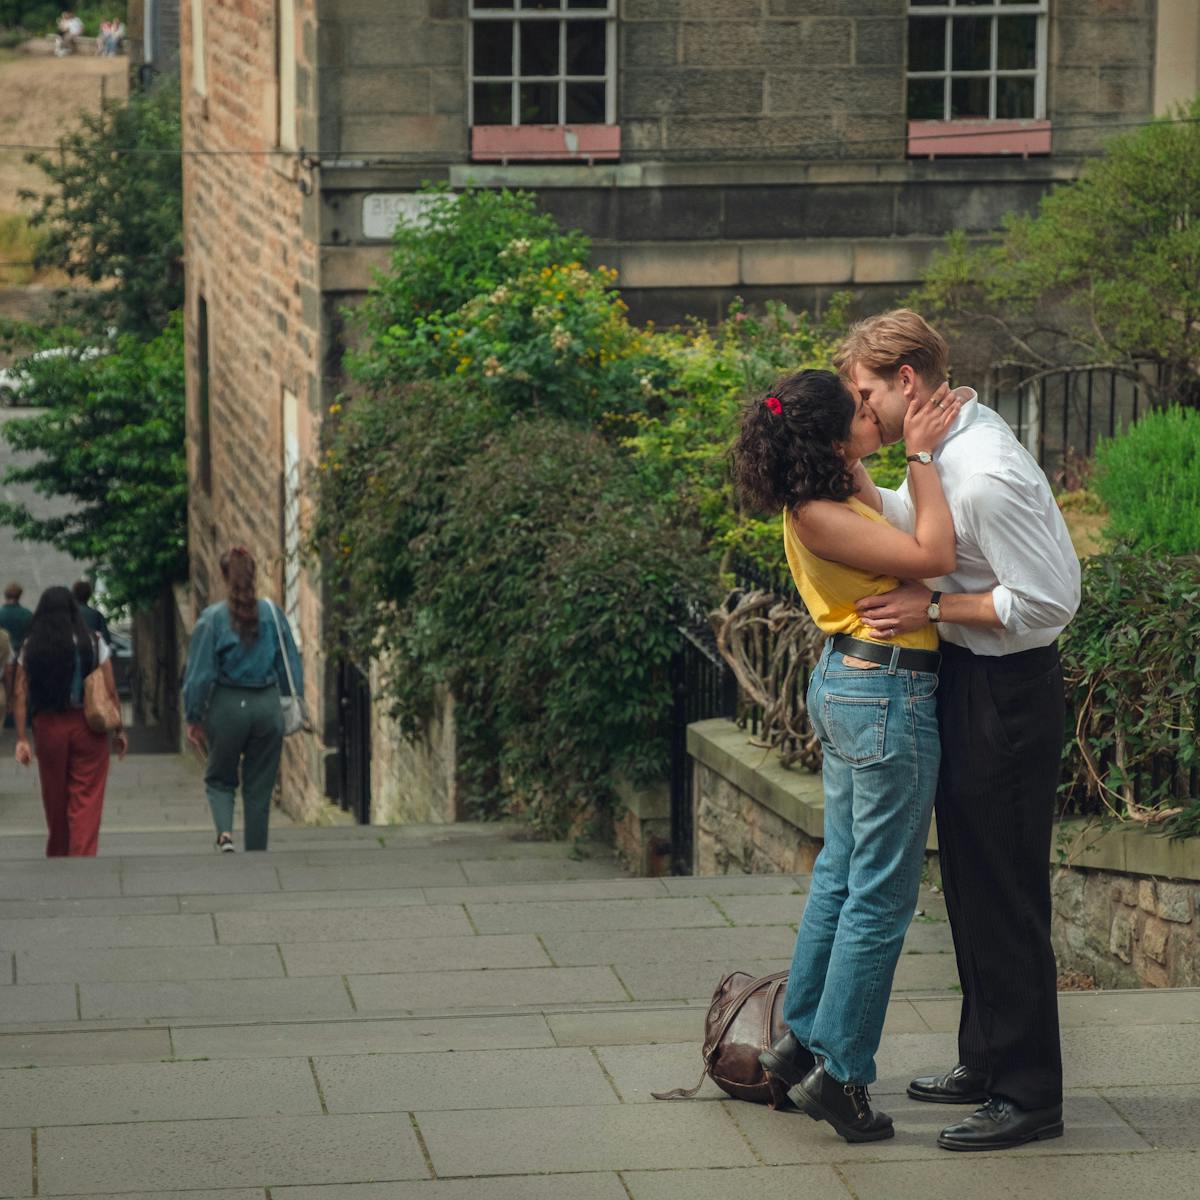 Emma Morley (Ambika Mod) and Dexter Mayhew (Leo Woodall) kiss on the street.